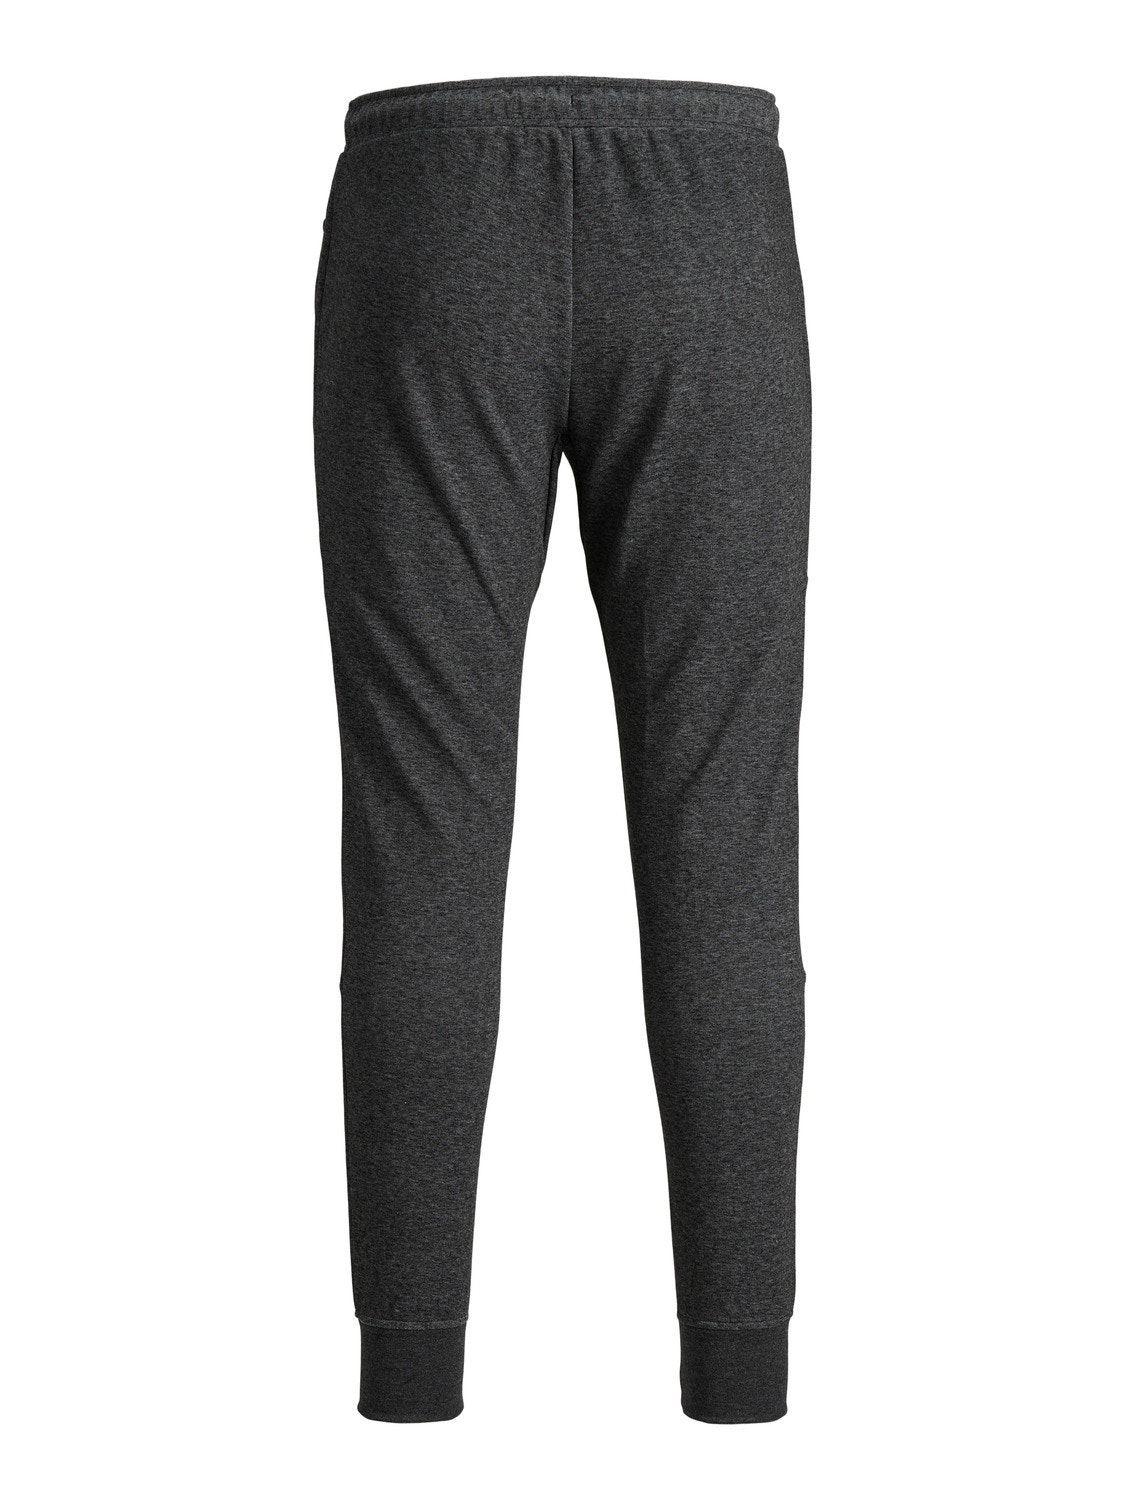 Grey Sweatpants, Grey Sweatpants Online, Buy Women's Grey Sweatpants  Australia